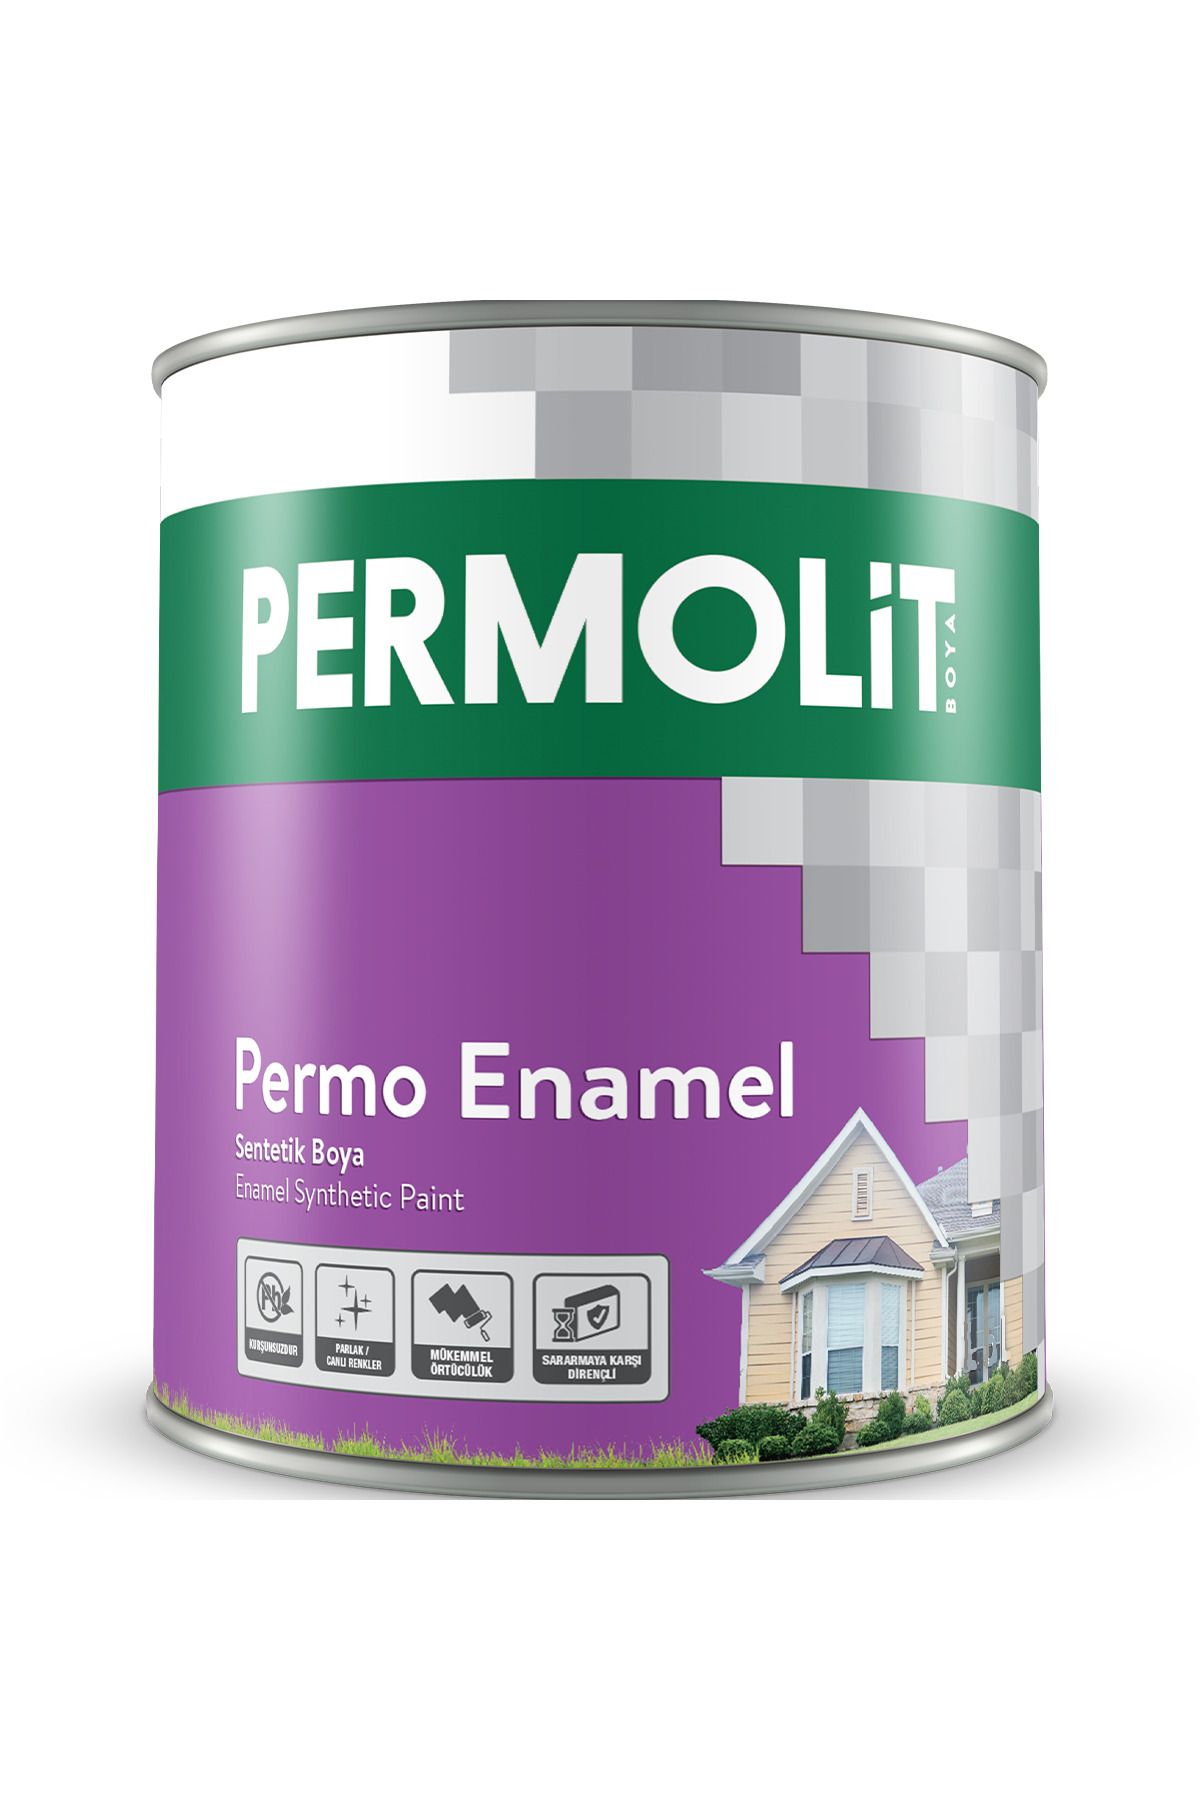 Permolit Permo Enamel Pembe Sentetik Boya 0,25 Lt. 34 Farklı Renk